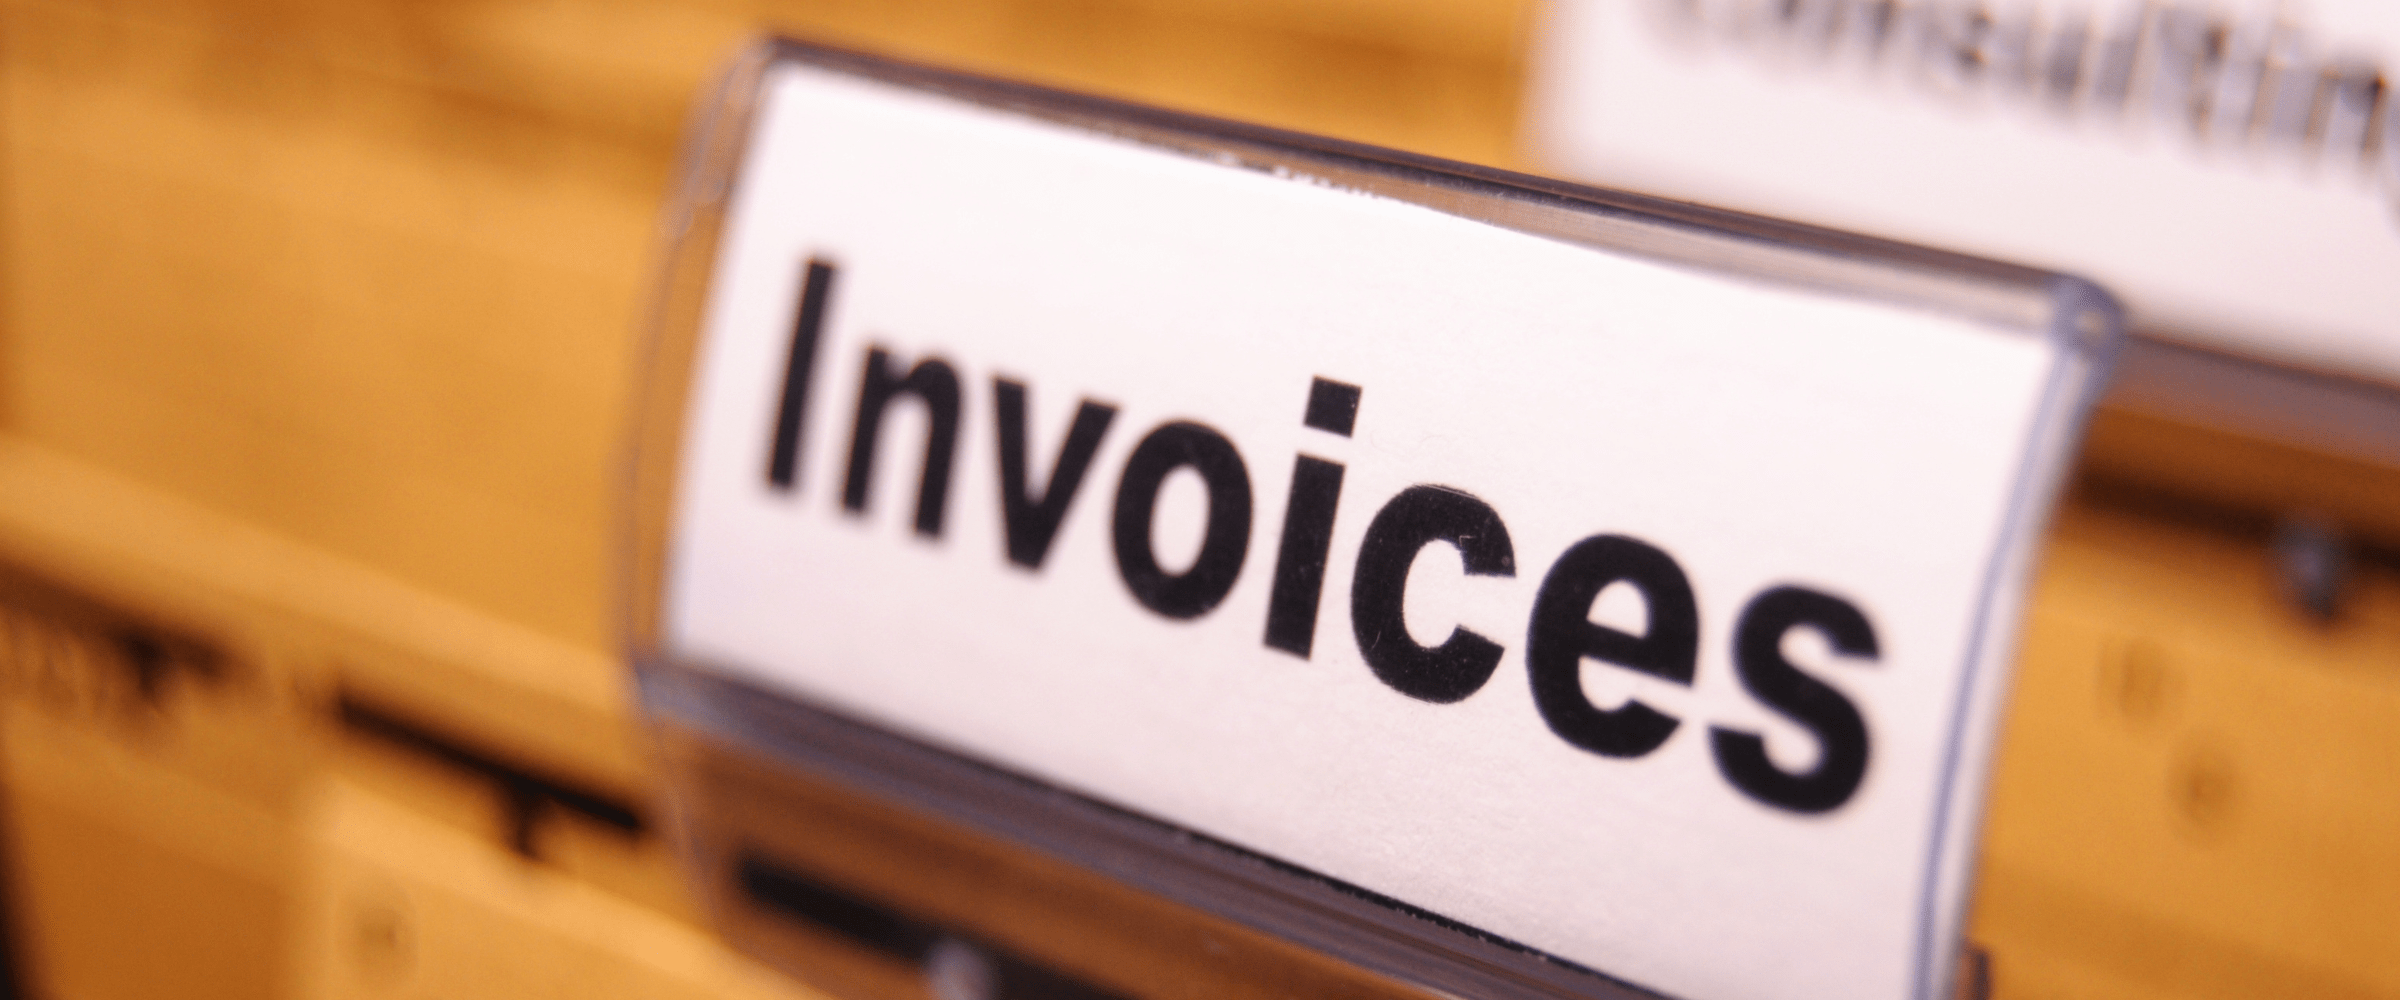 Digital invoice for freelancers